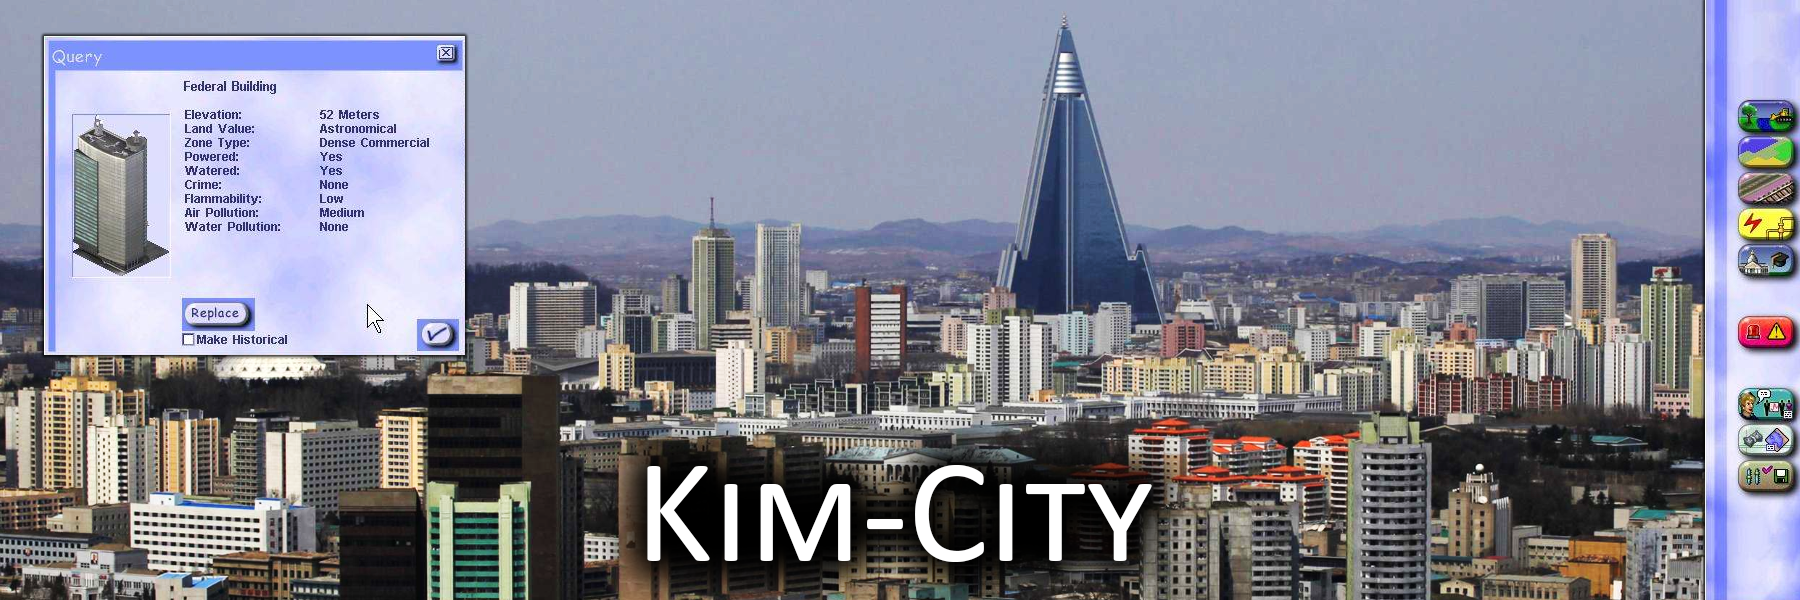 Kim-City 2000